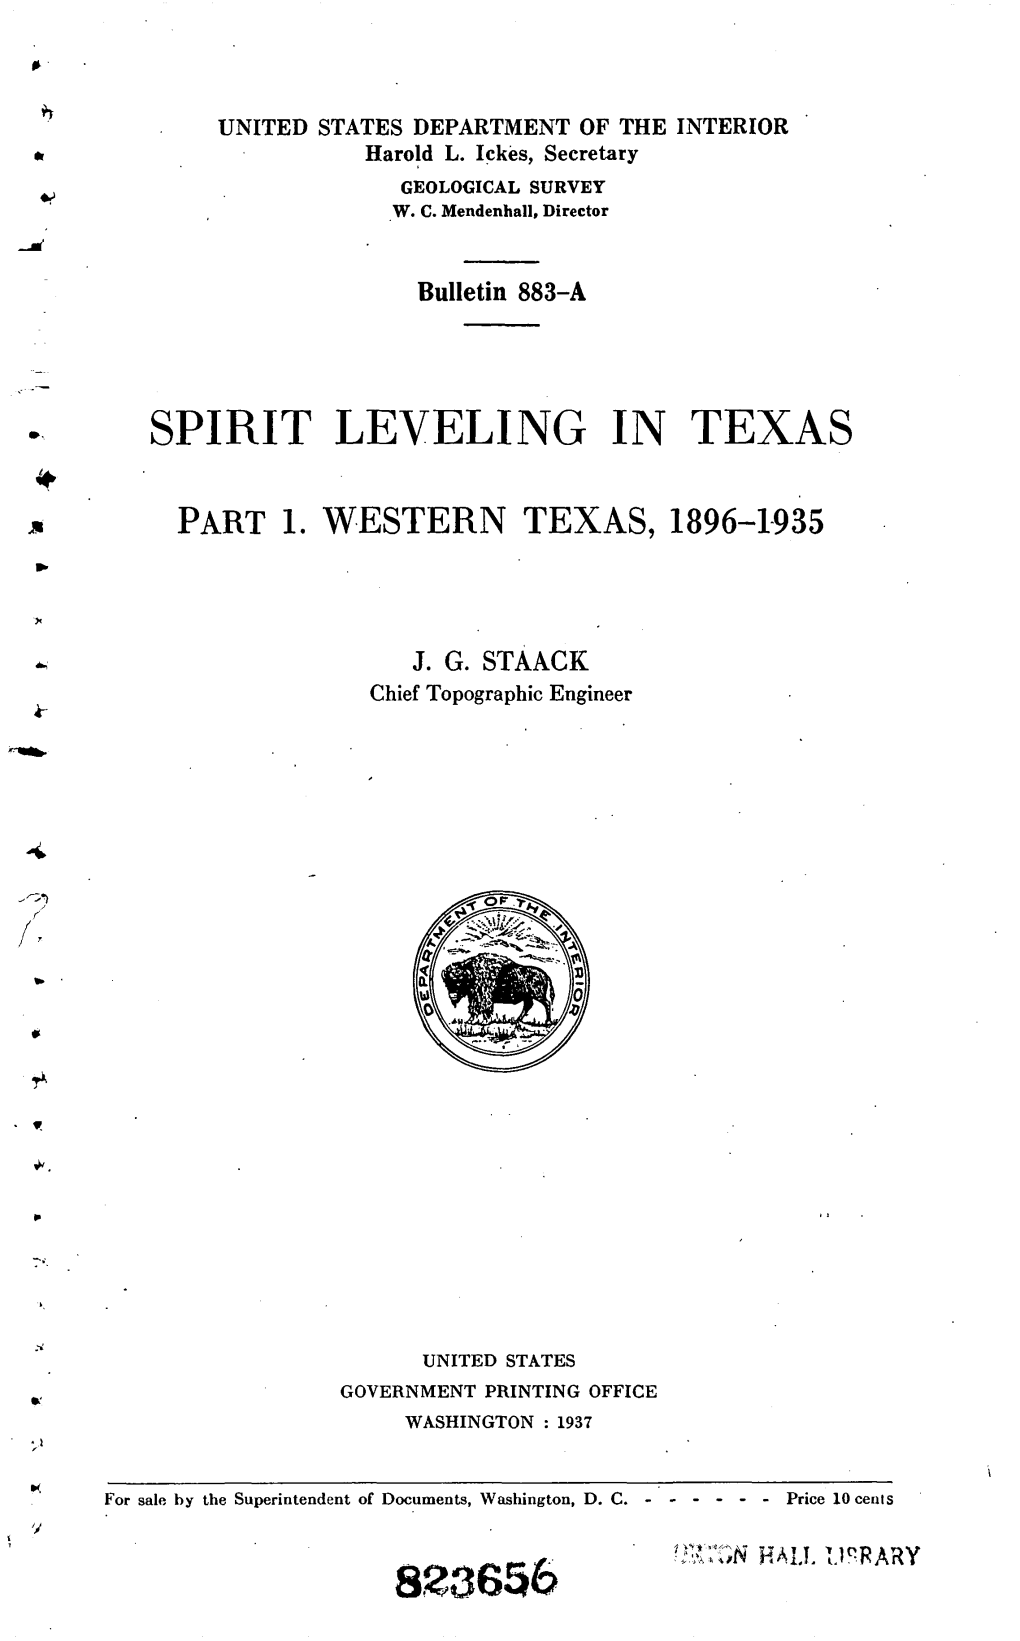 PART I. WESTERN TEXAS, 1895-1935